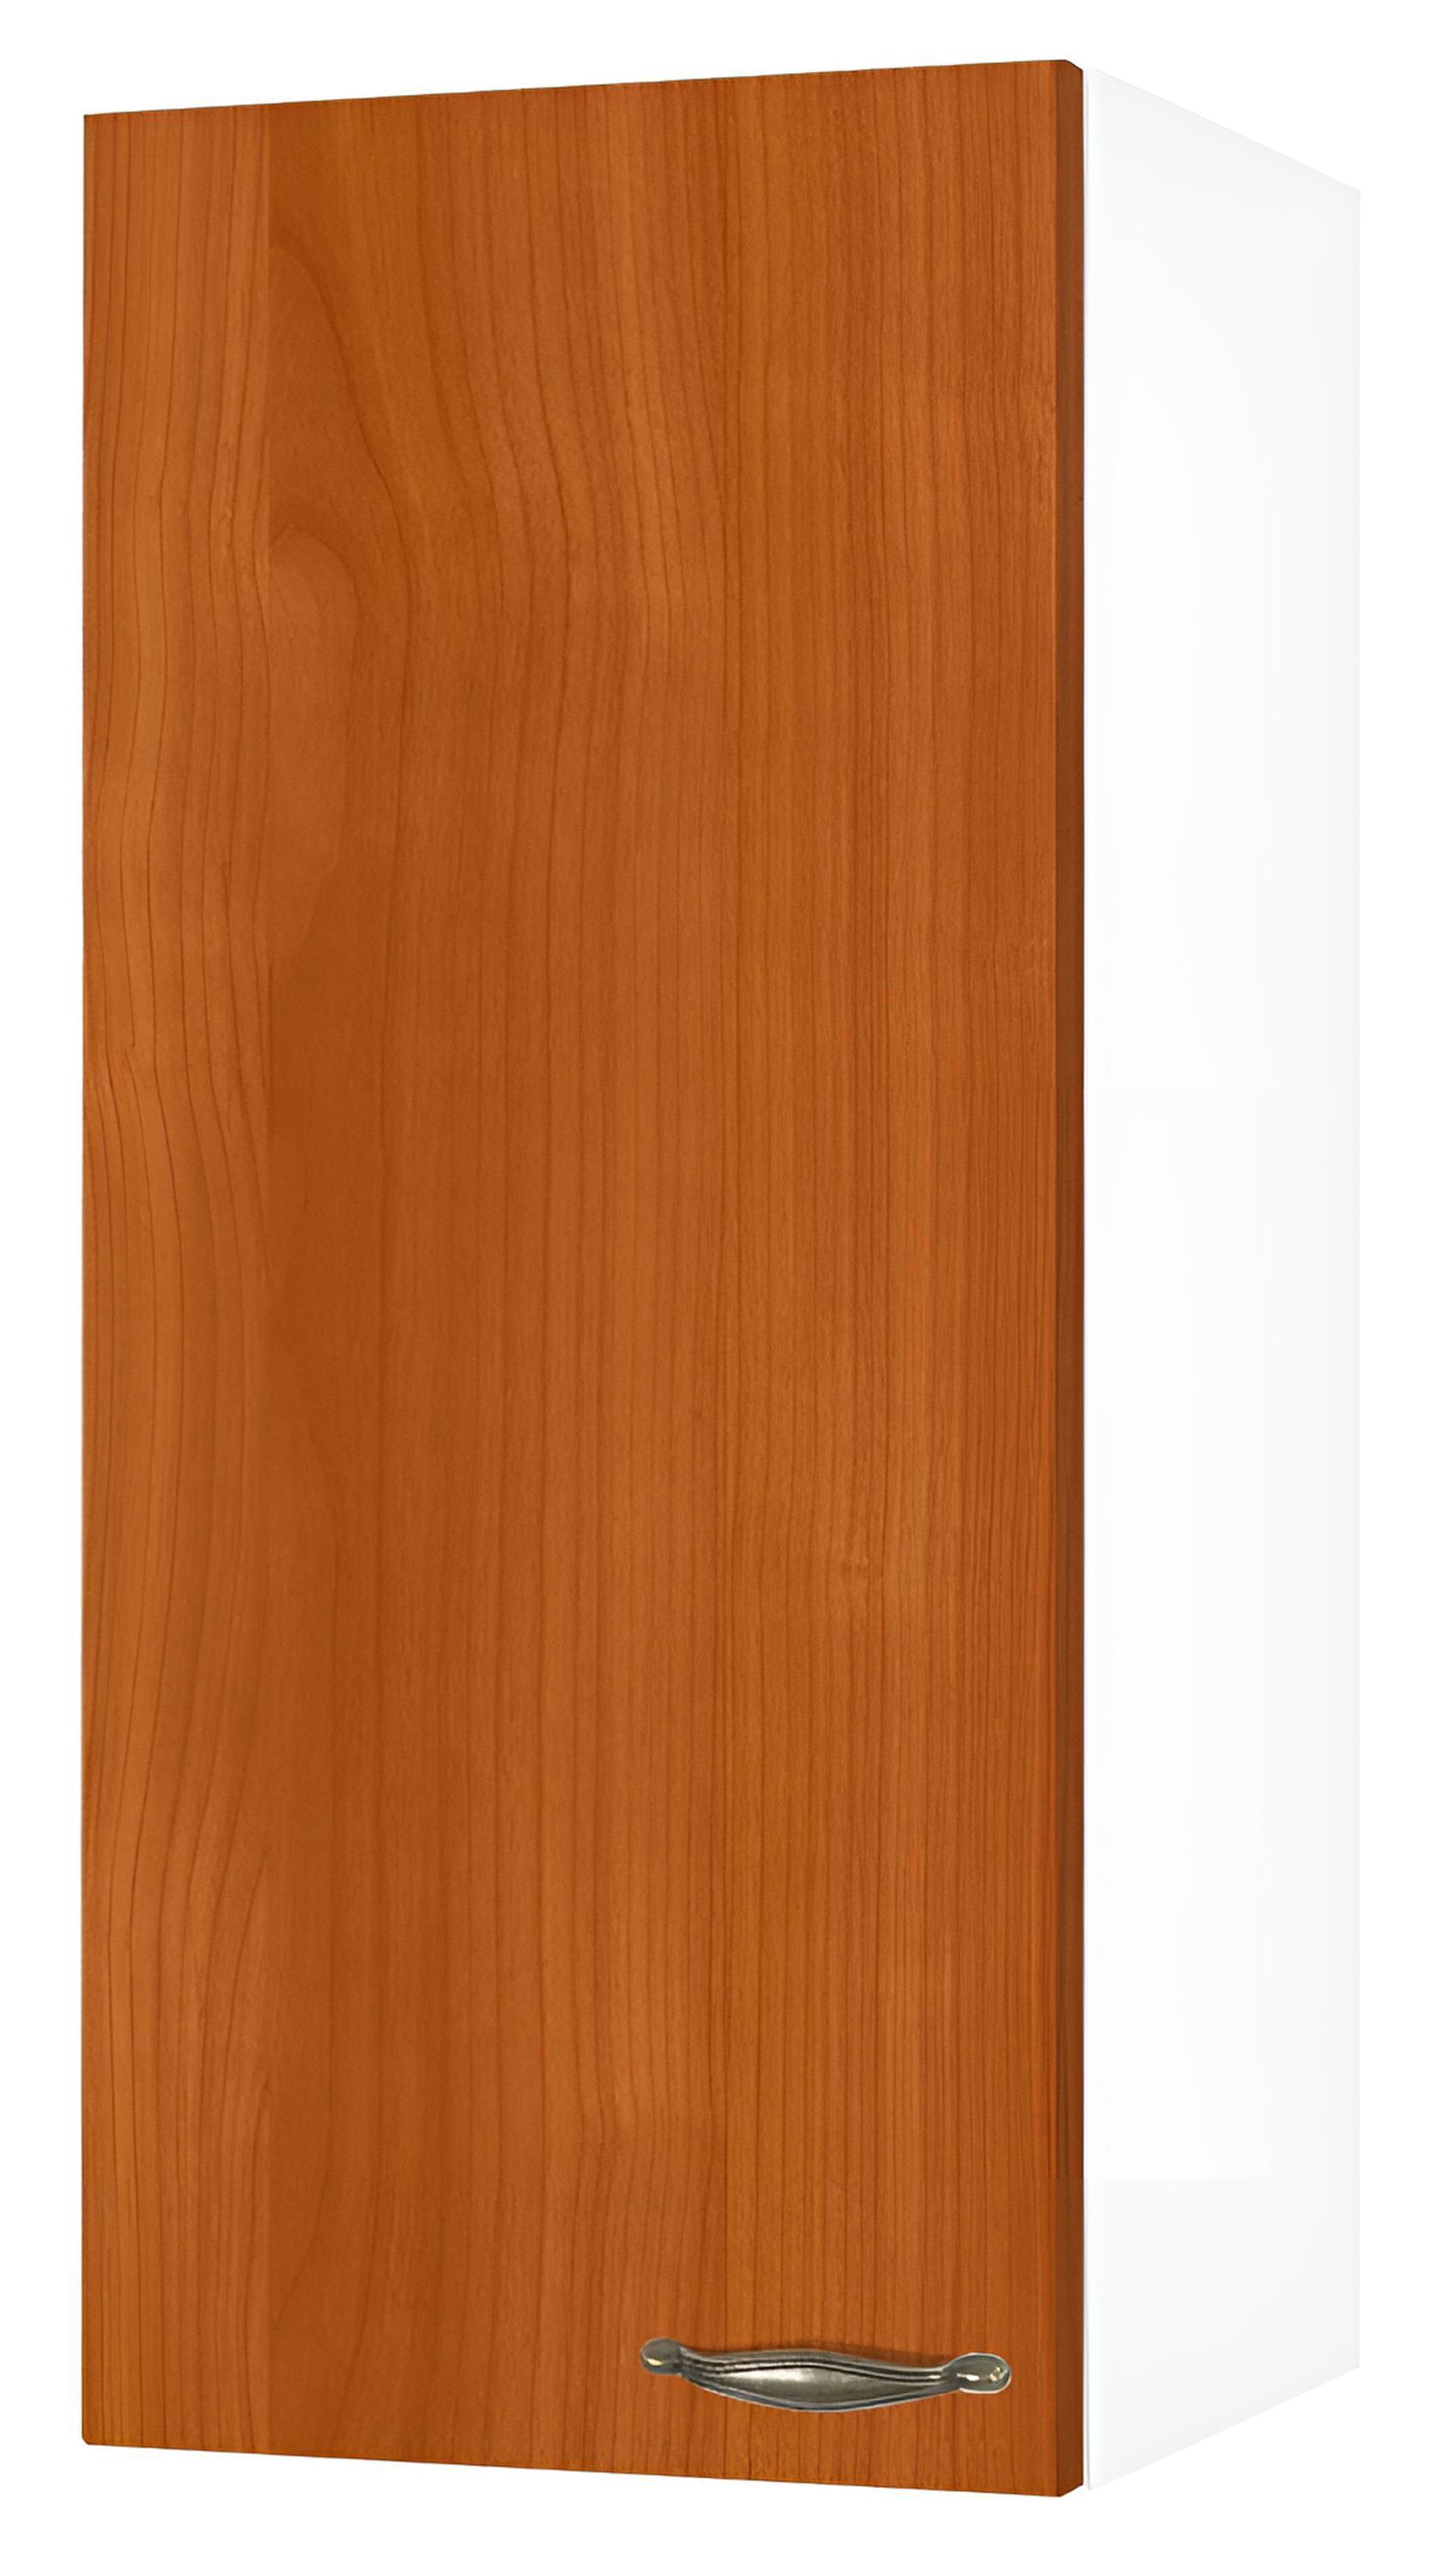  шкаф Полюс В 300 30x67x30 см ЛДСП цвет вишня по цене 2090 ₽/шт .